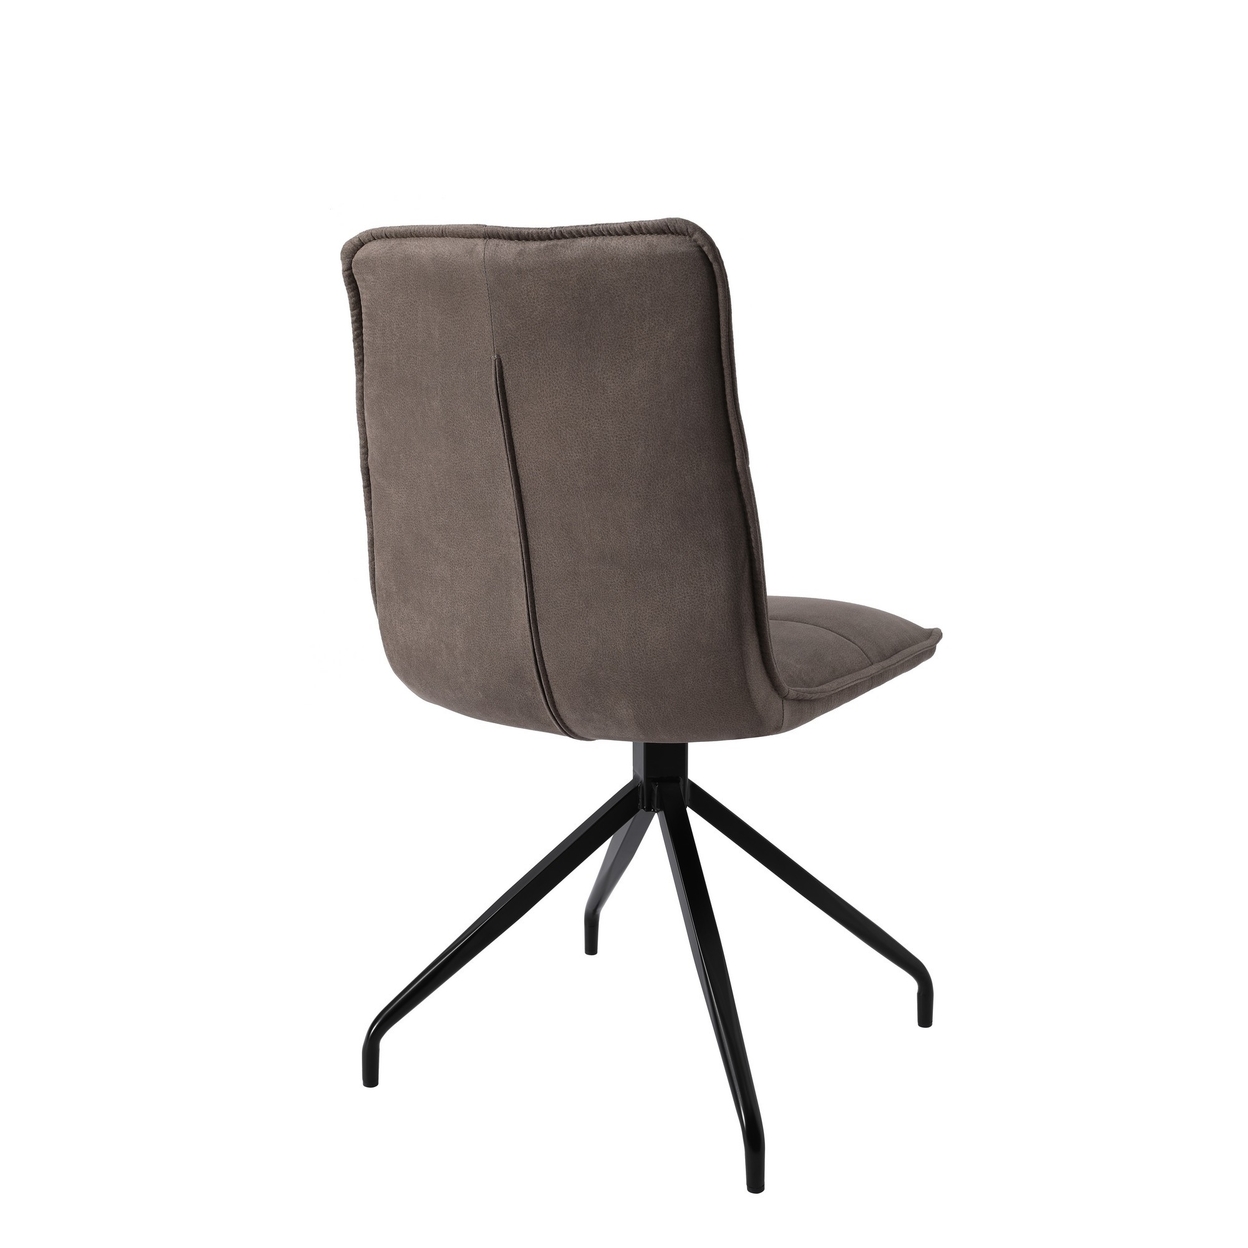 Dining Chair With Fabric Swivel Seat, Set Of 2, Brown- Saltoro Sherpi